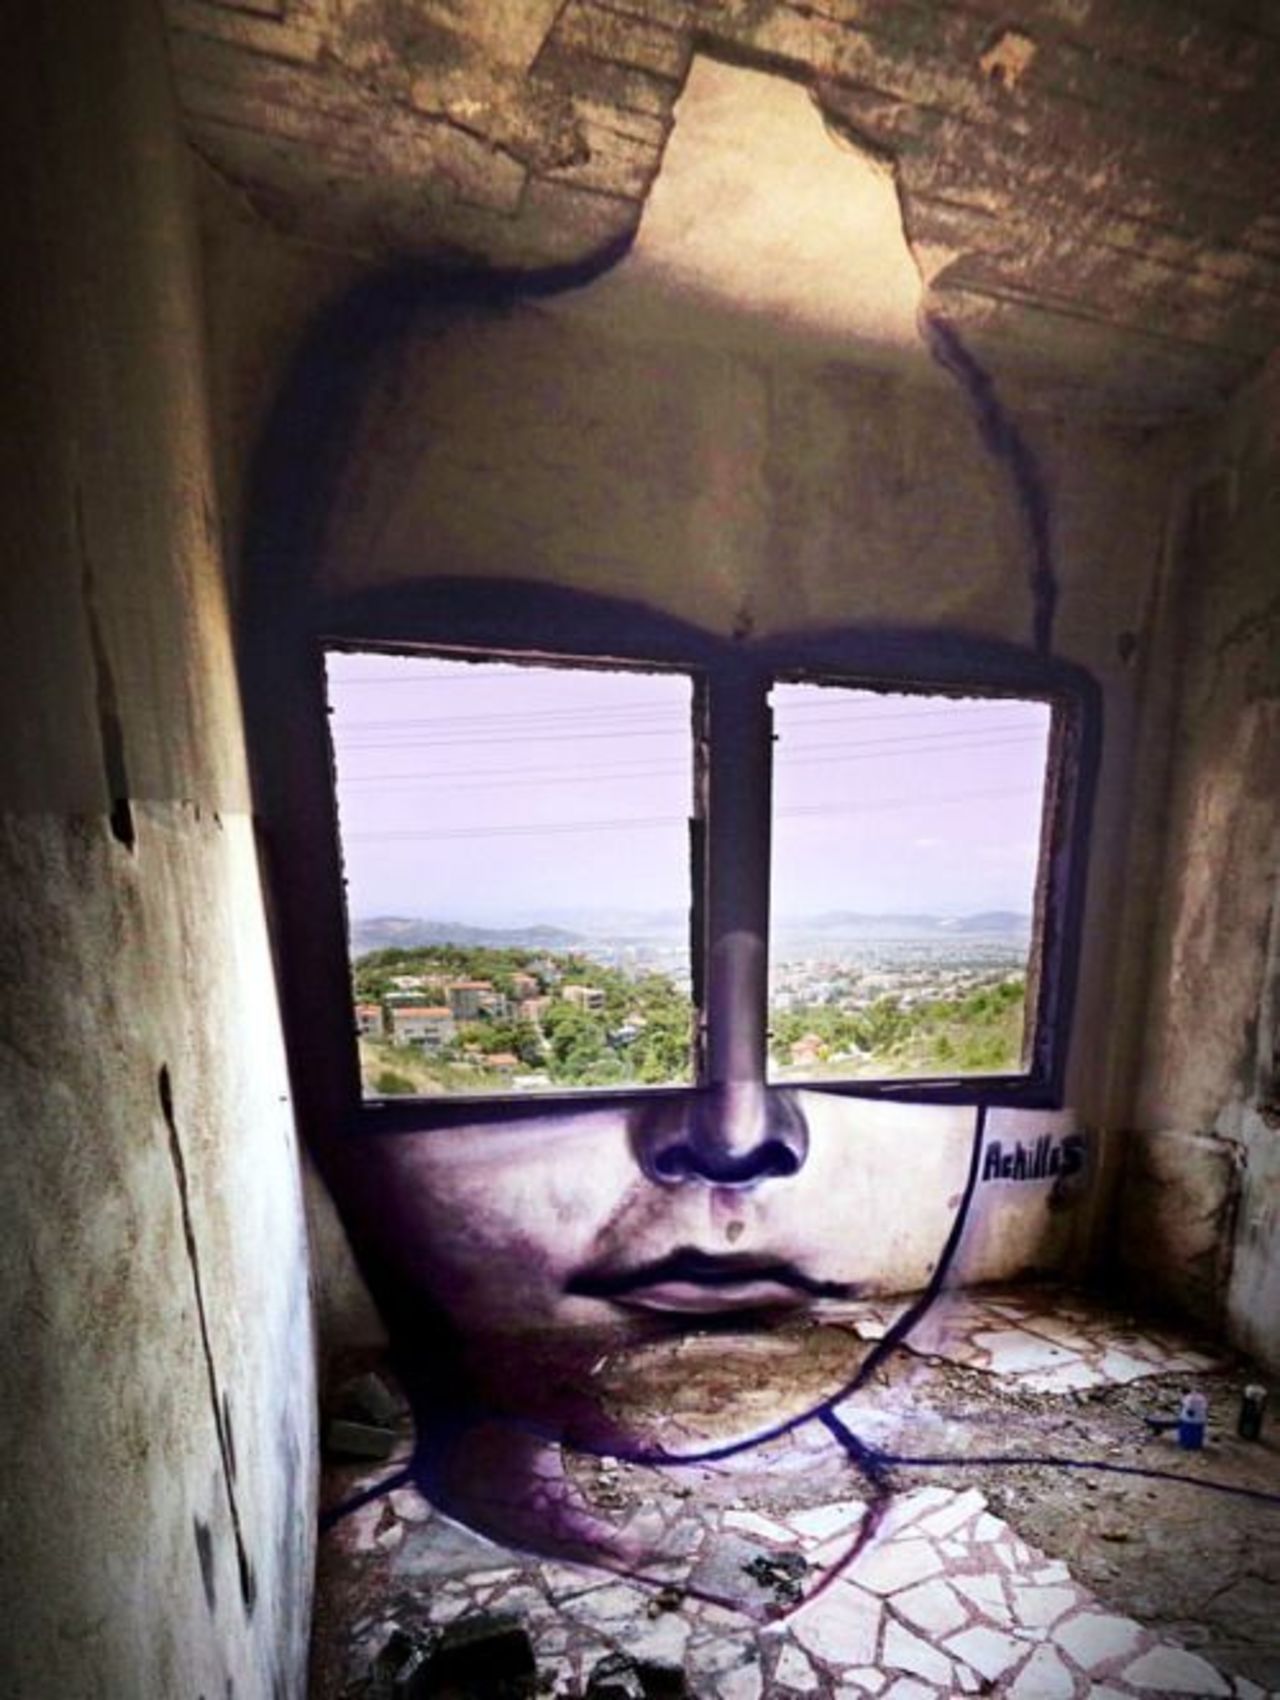 By Achilles - Located in Greece#streetart #mural #graffiti #art https://t.co/TnQo2XH4LS